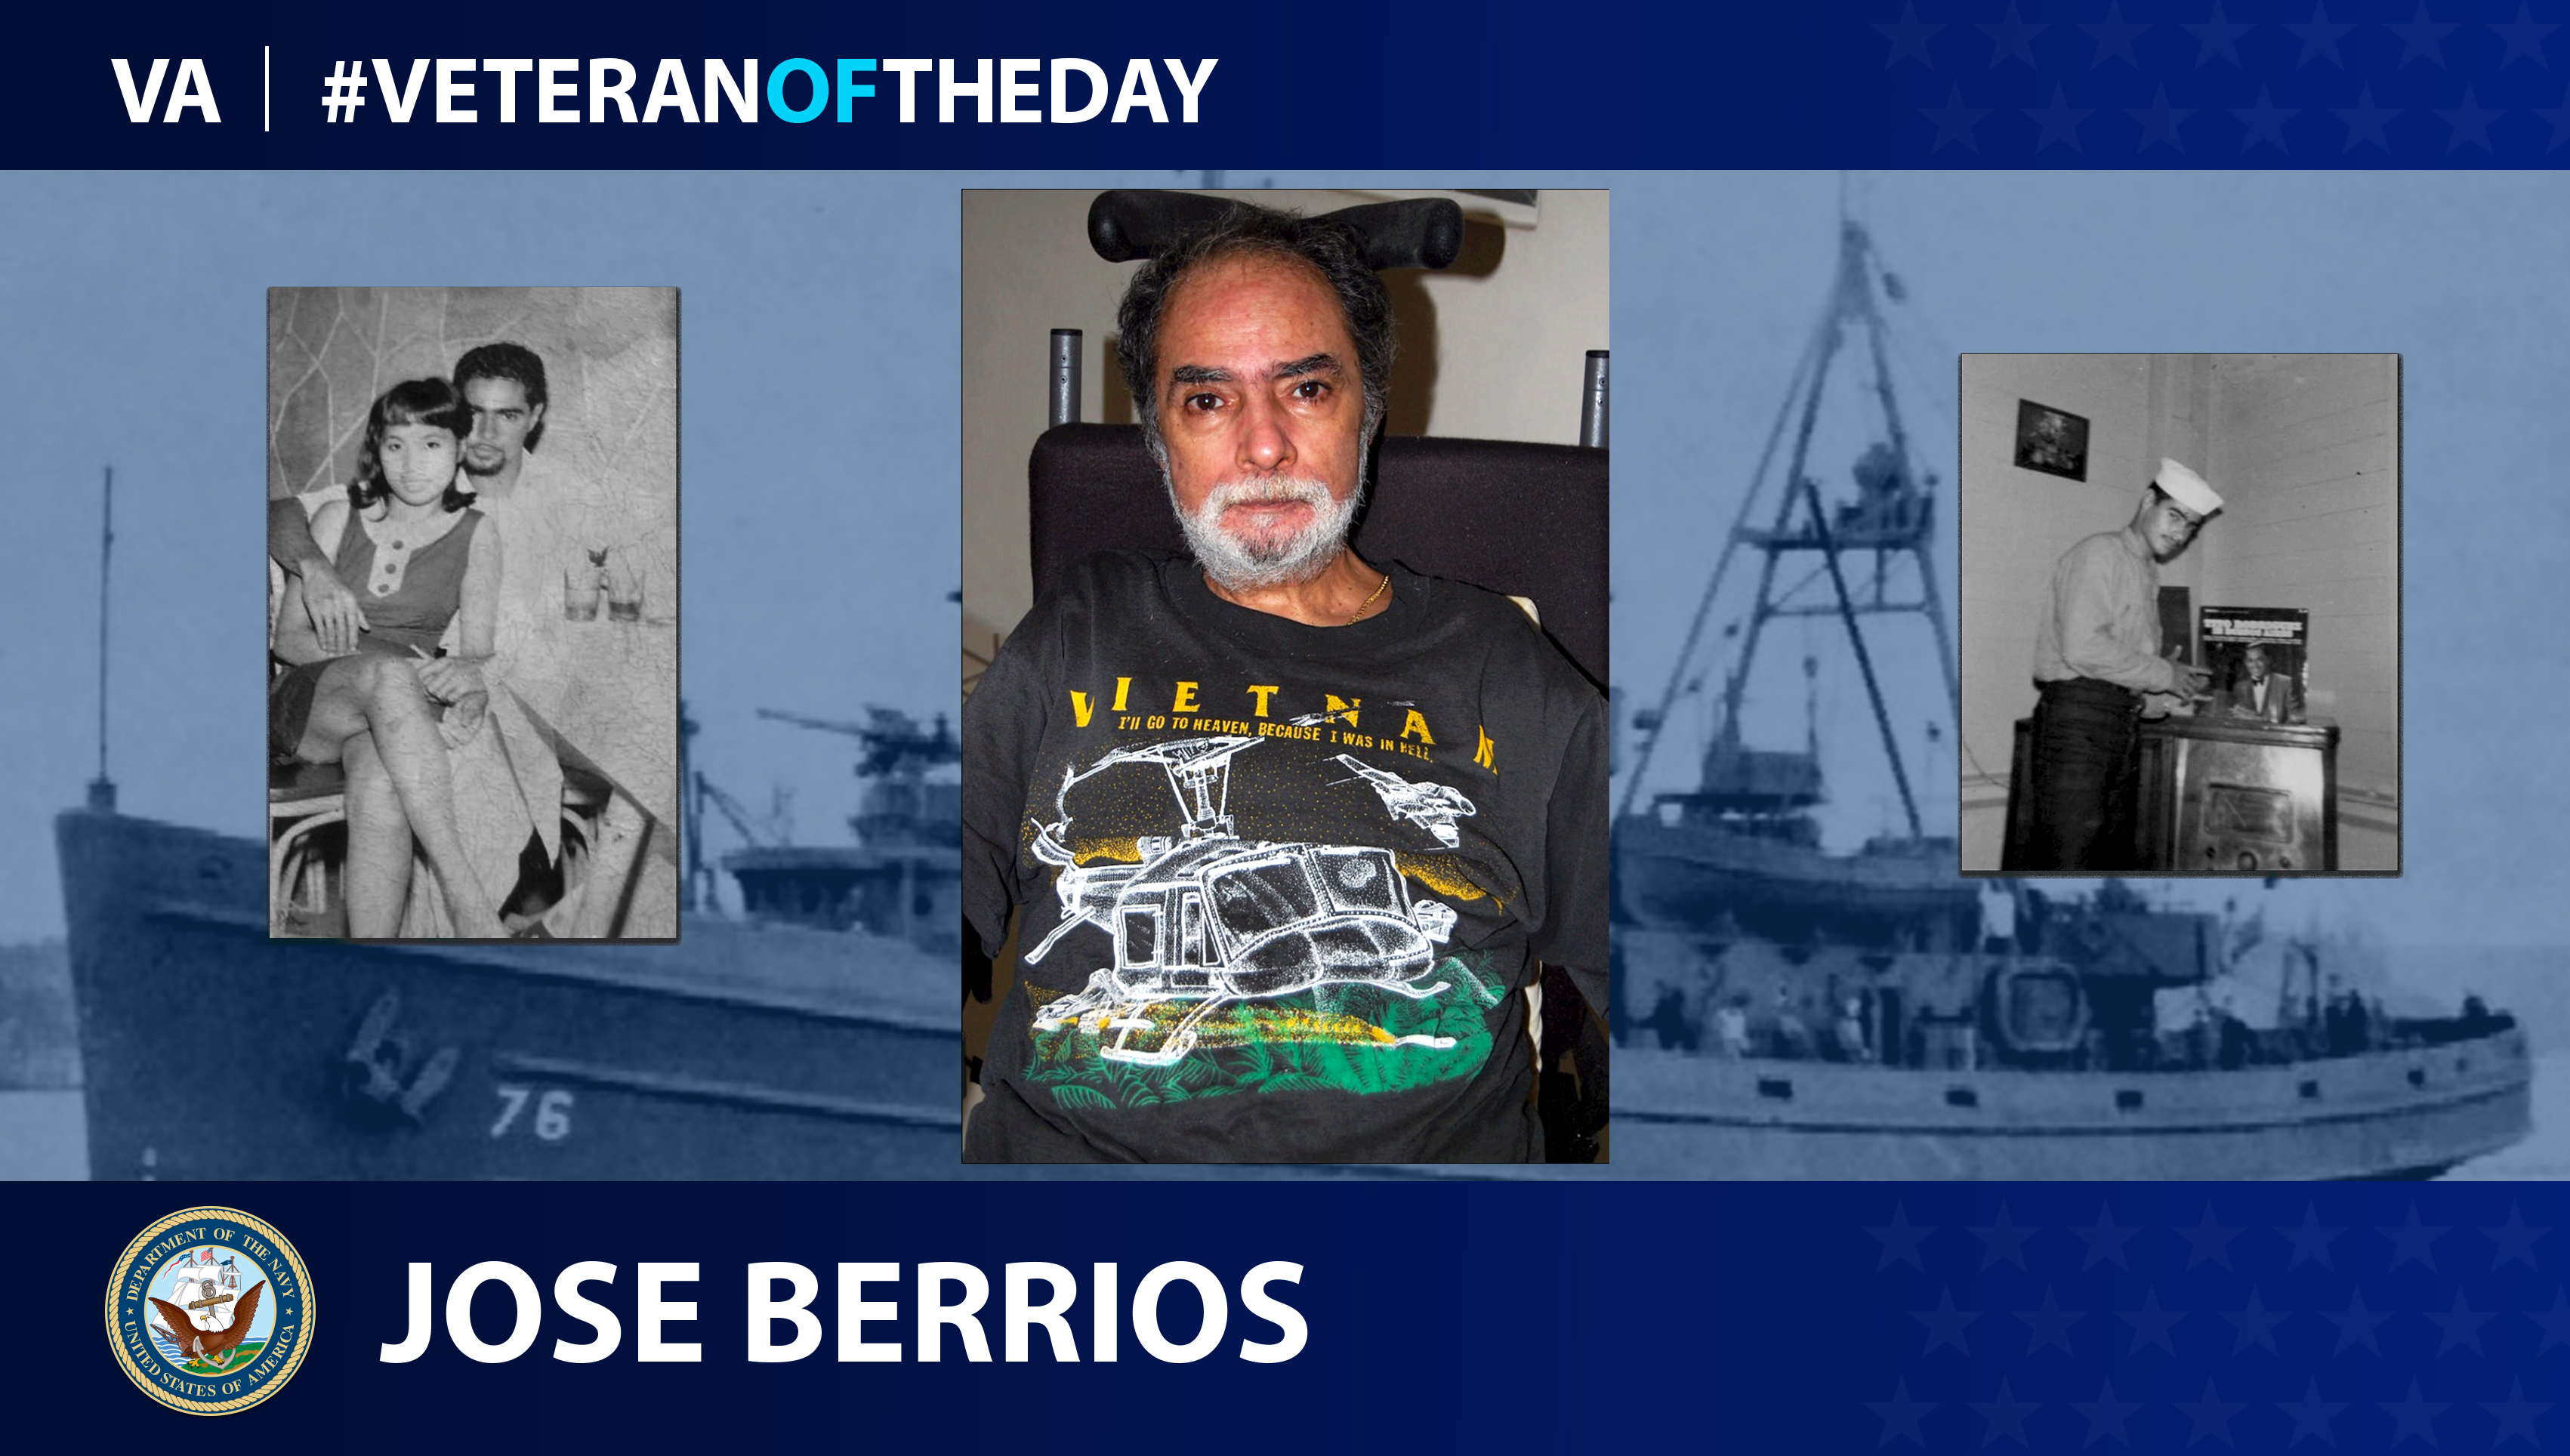 Navy Veteran Jose Antonio Berrios is today's Veteran of the day.